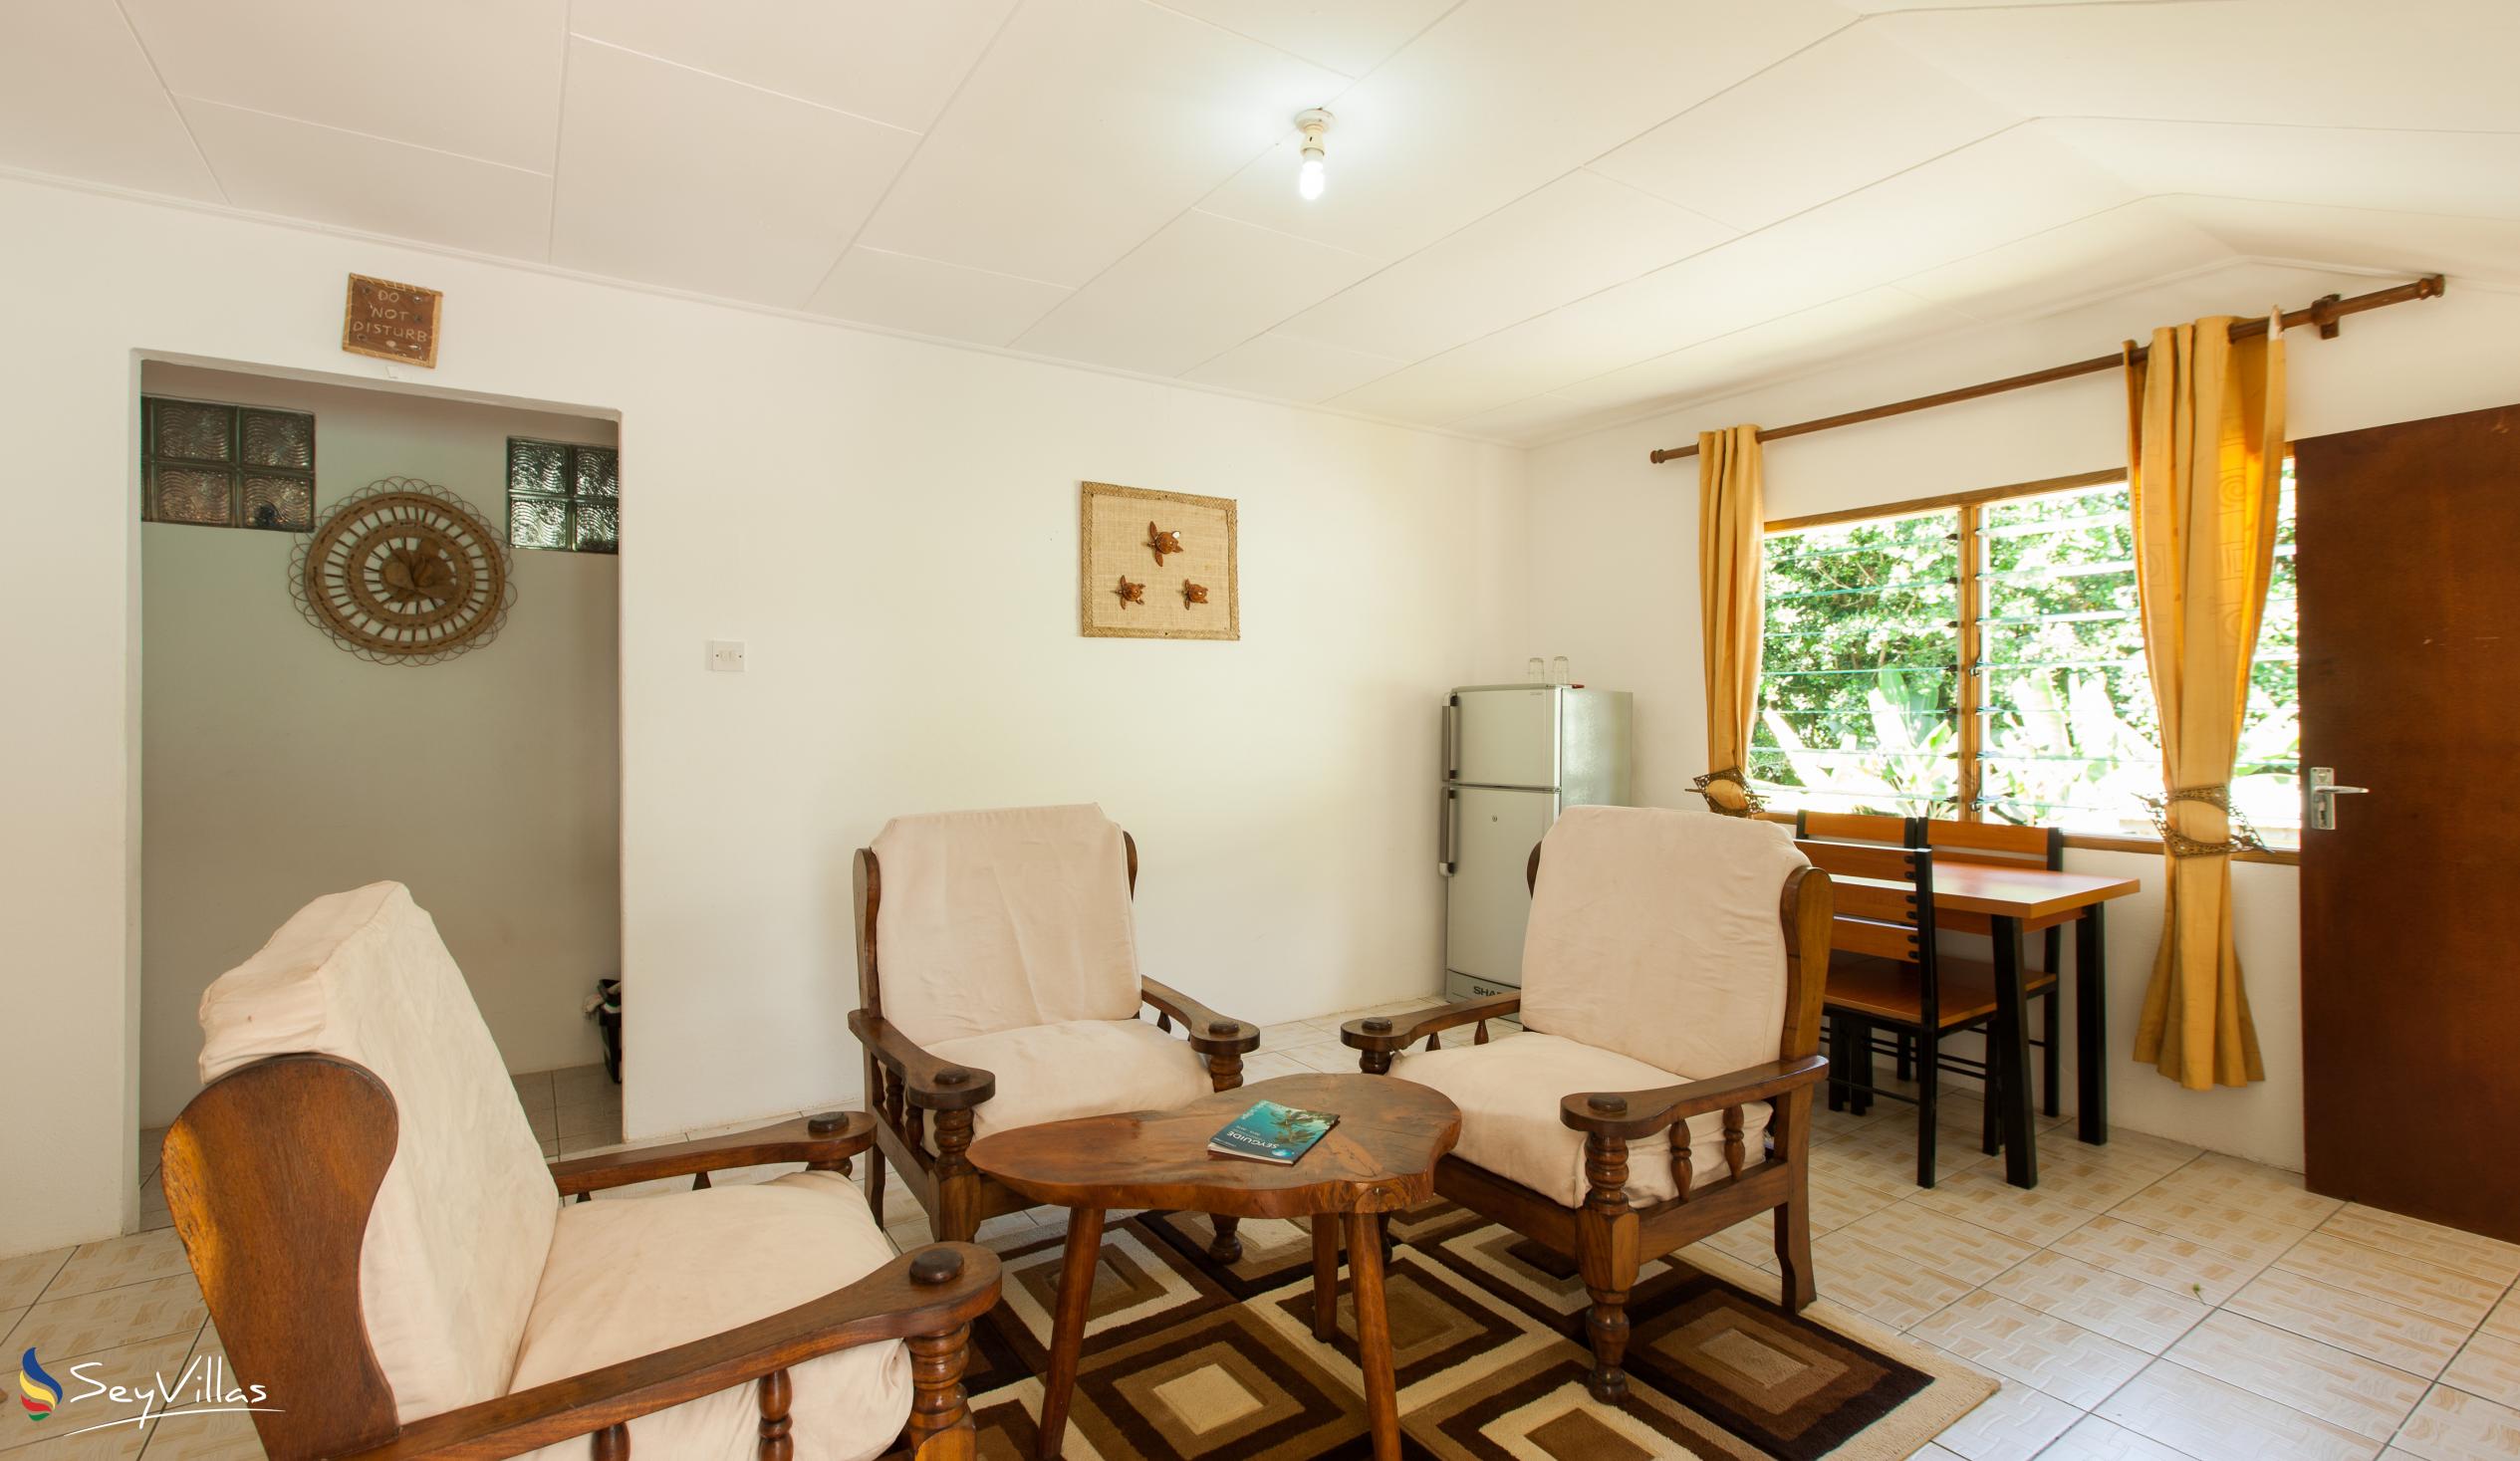 Photo 43: Tannette's Villa - Indoor area - La Digue (Seychelles)